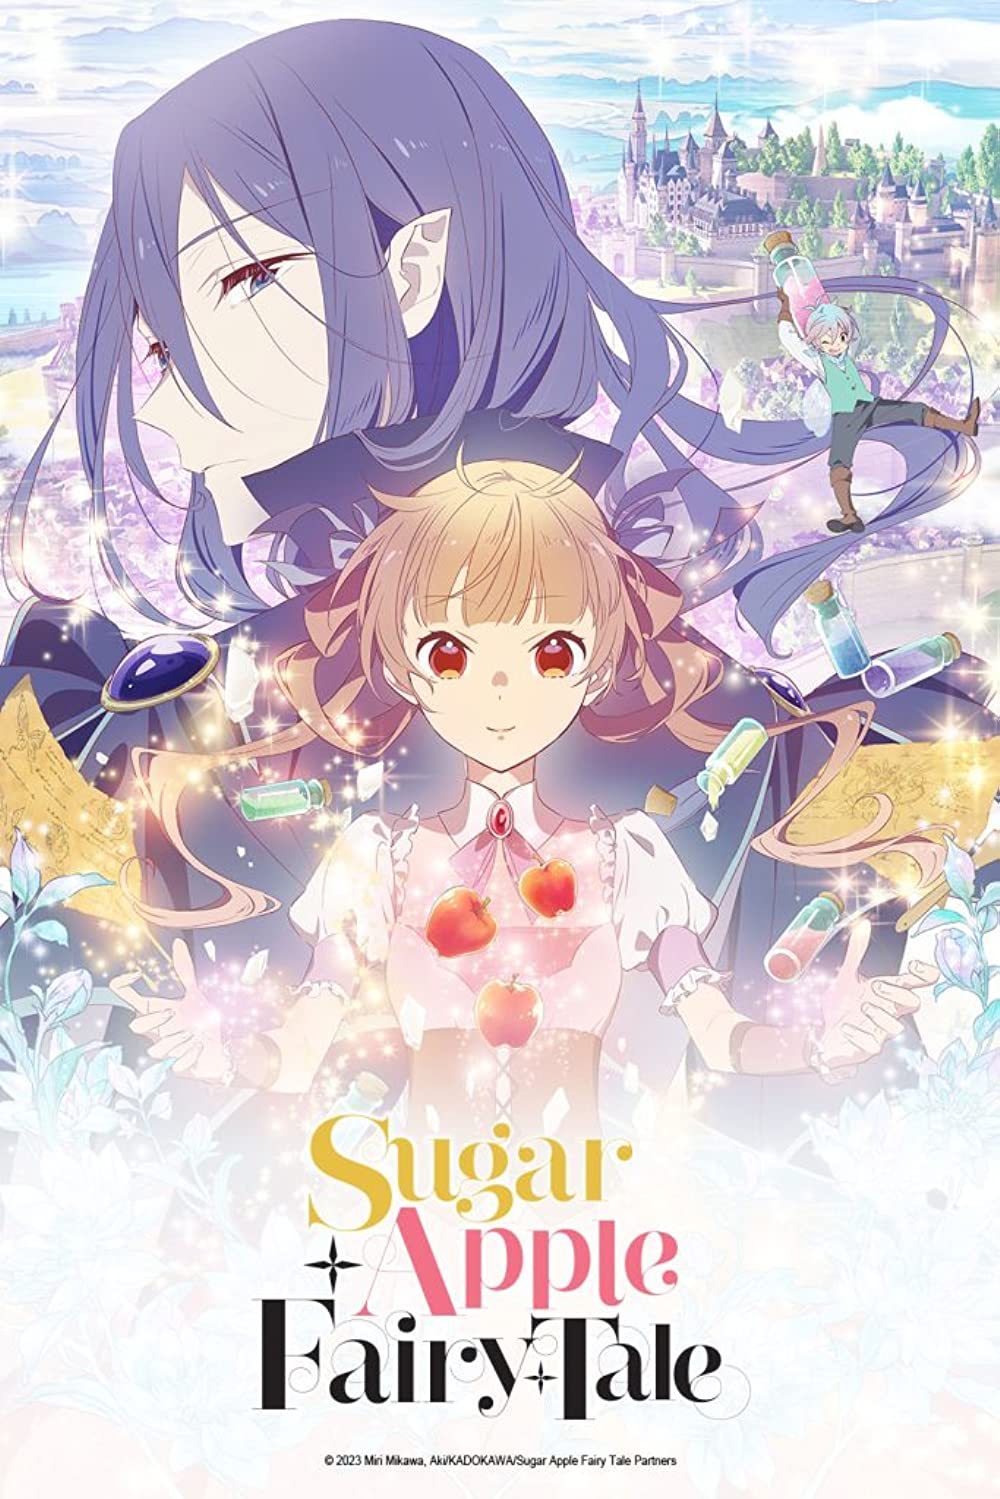 My Prediction for Sugar Apple Fairy